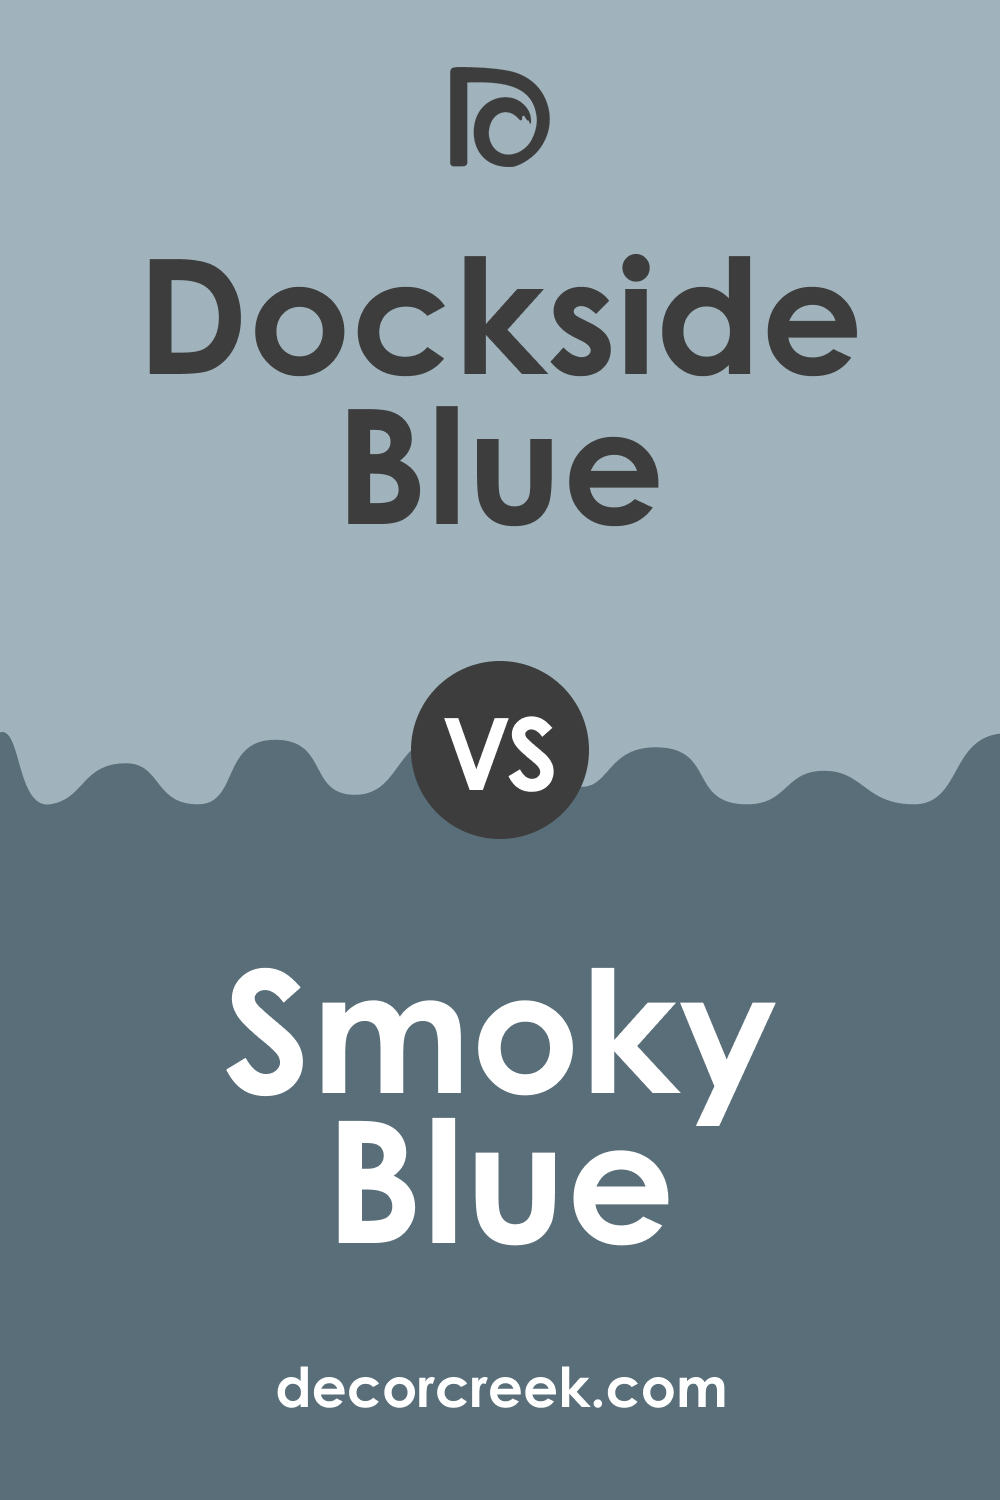 Dockside Blue vs Smoky Blue